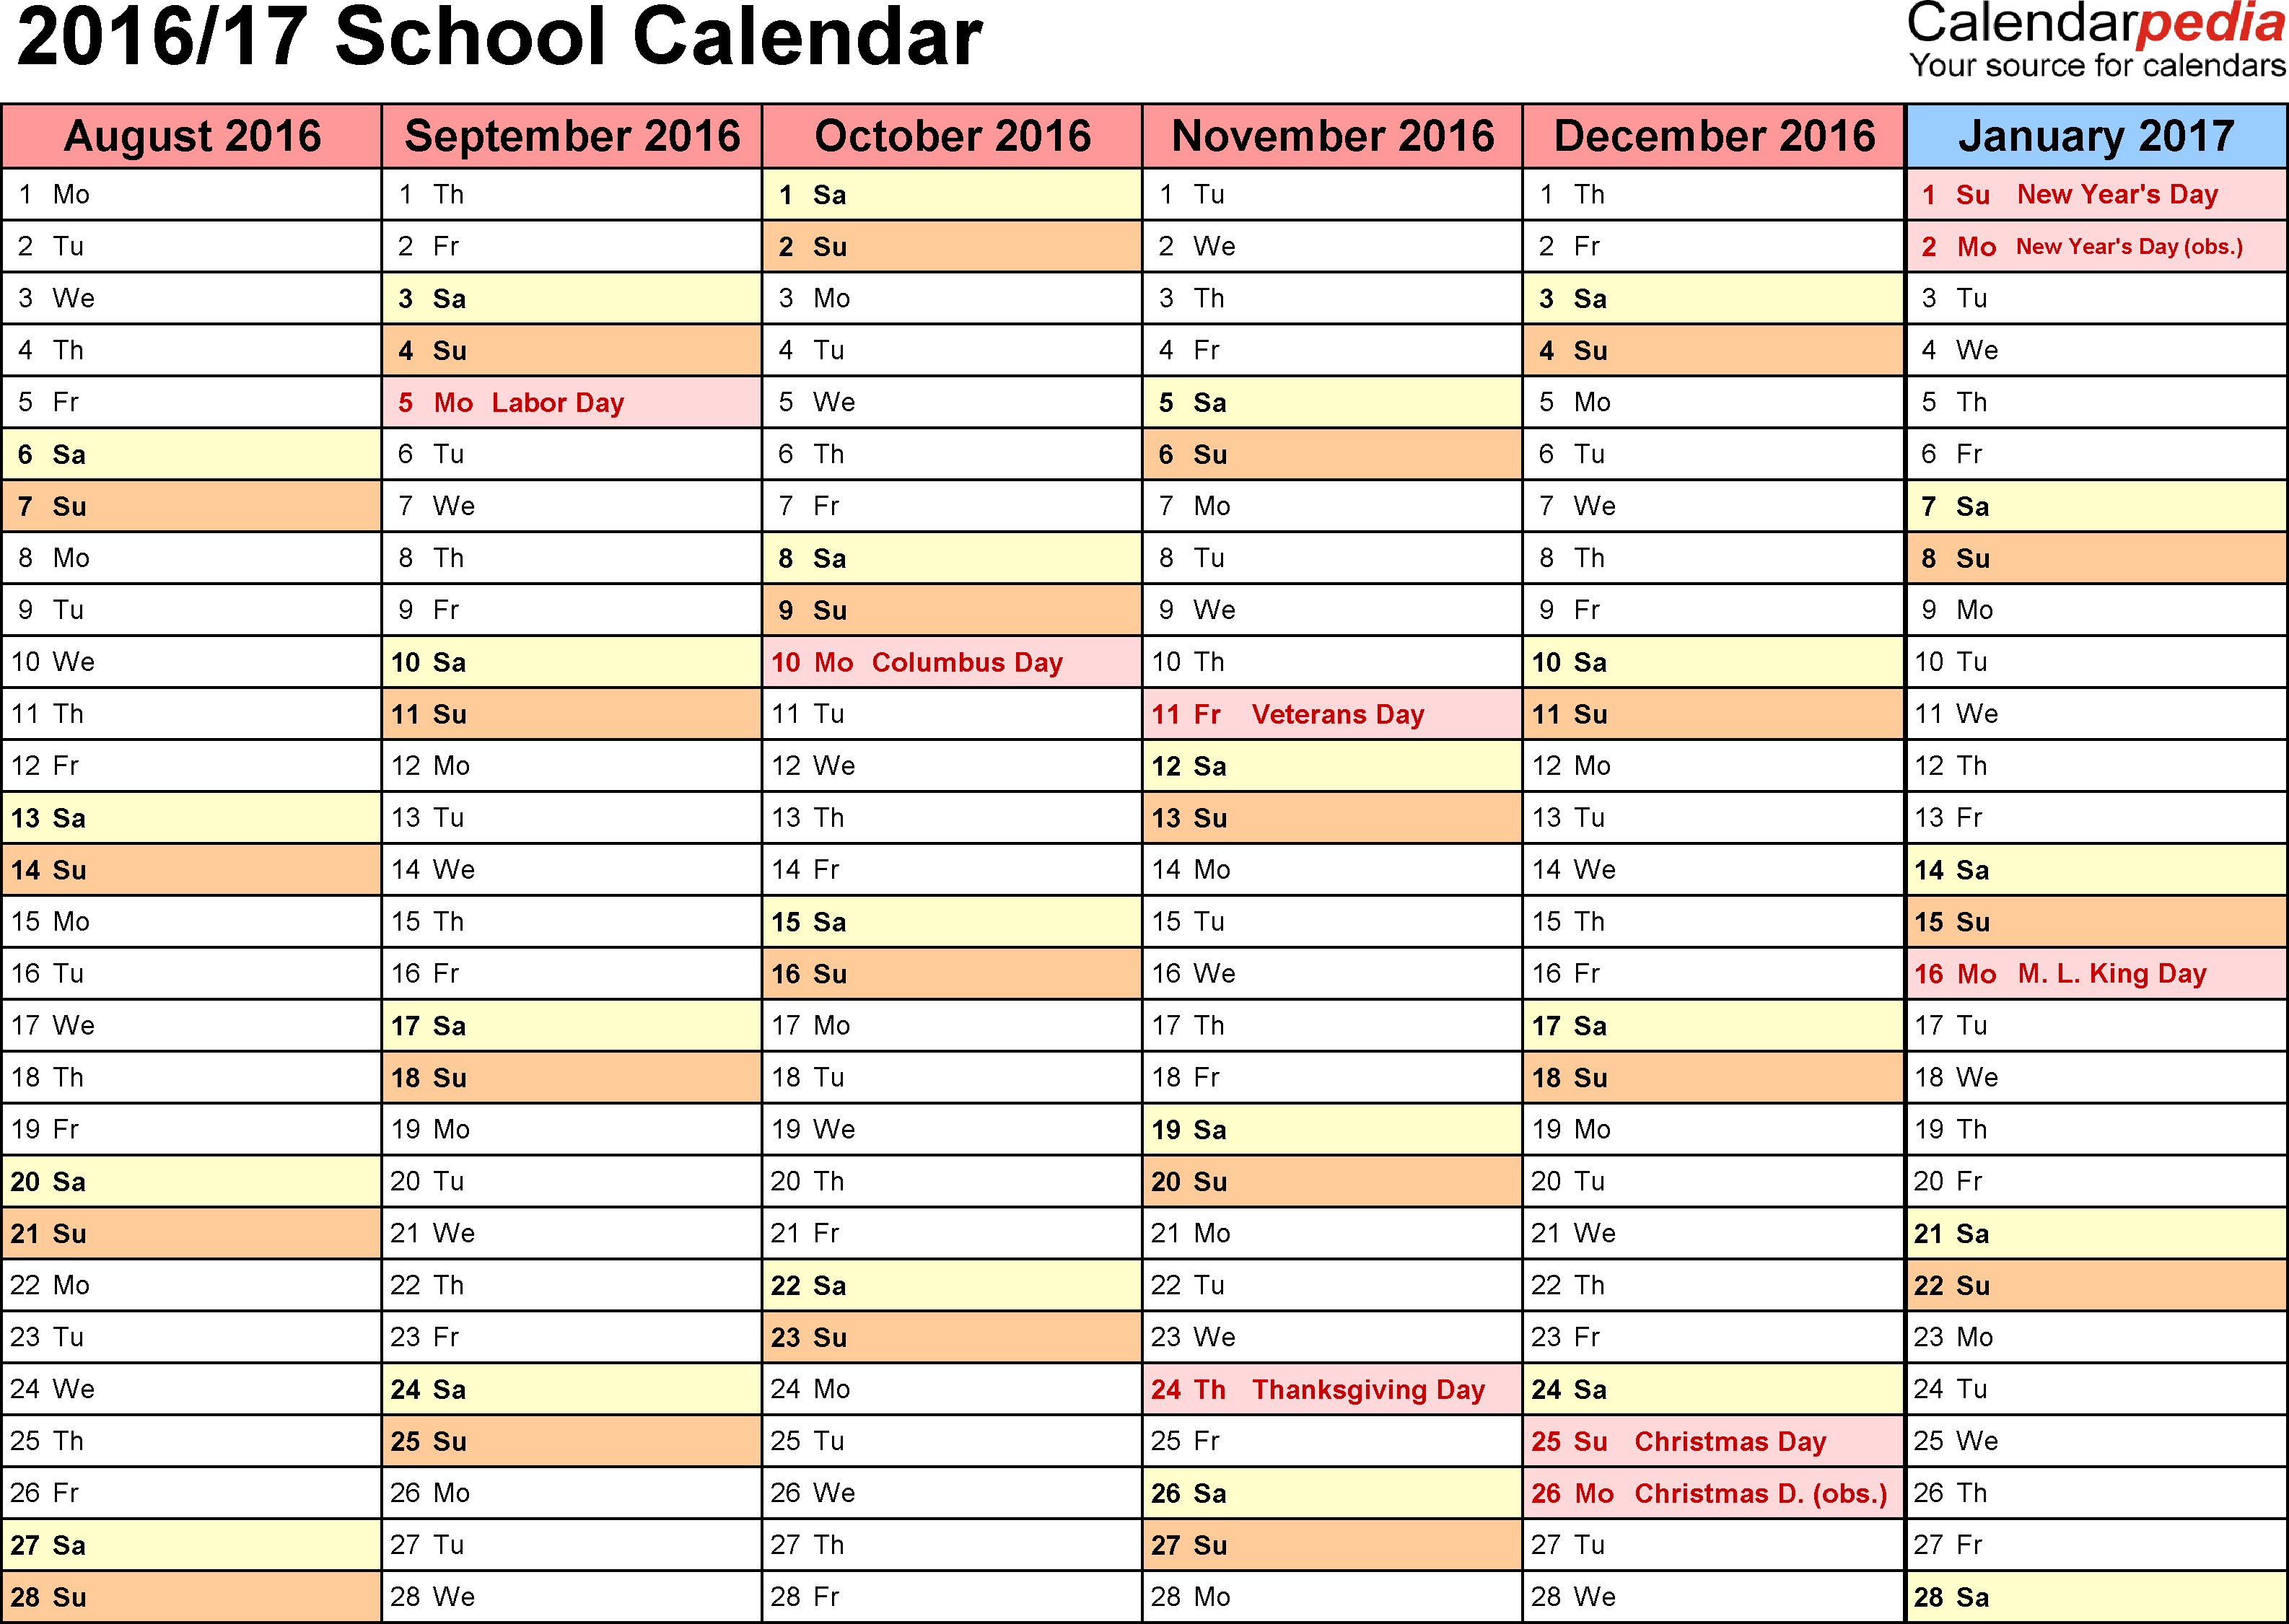 Calendar 2017 Excel South Africa | Calendar 2017 Kalnirnay pertaining to 2017 School Calendar South Africa